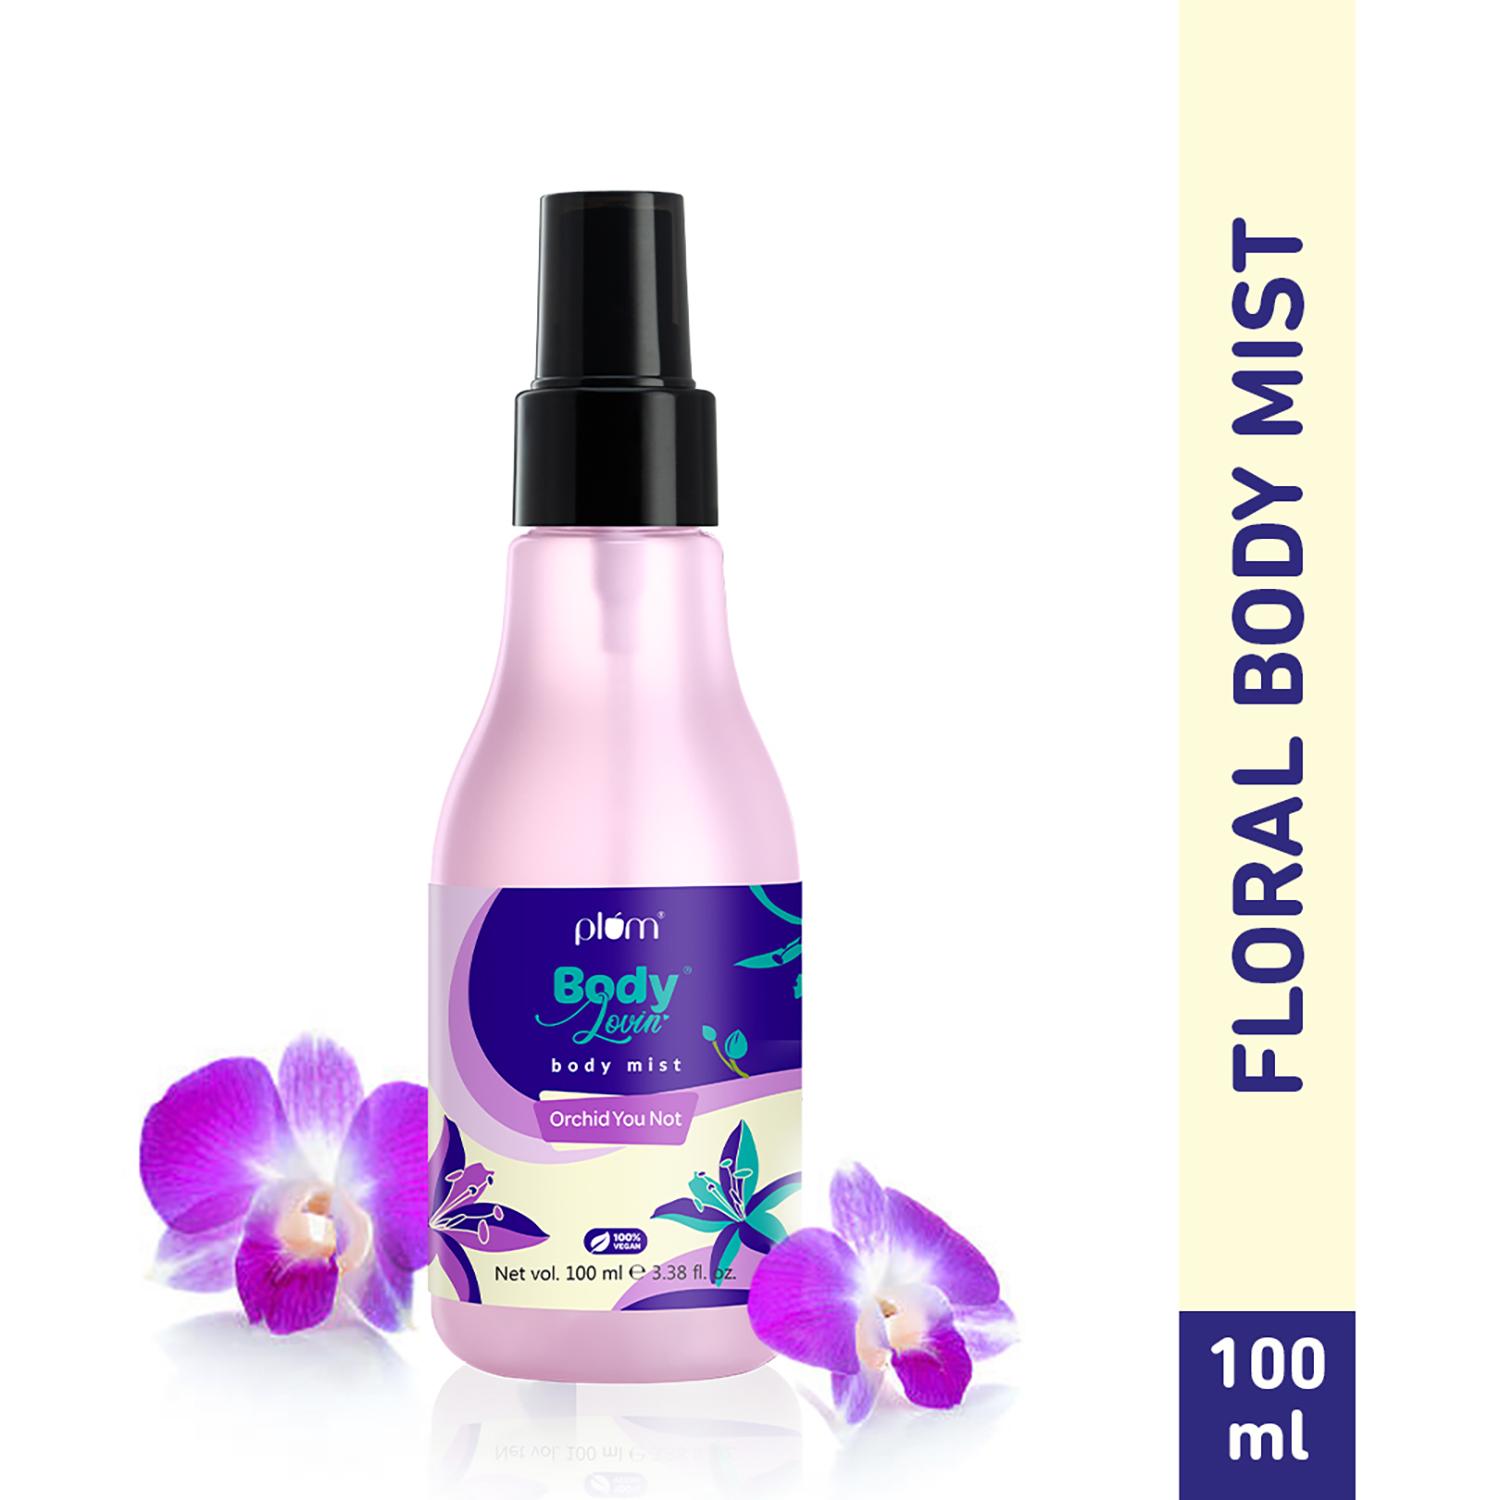 Plum | Plum Bodylovin Orchid You Not Body Mist (100ml)